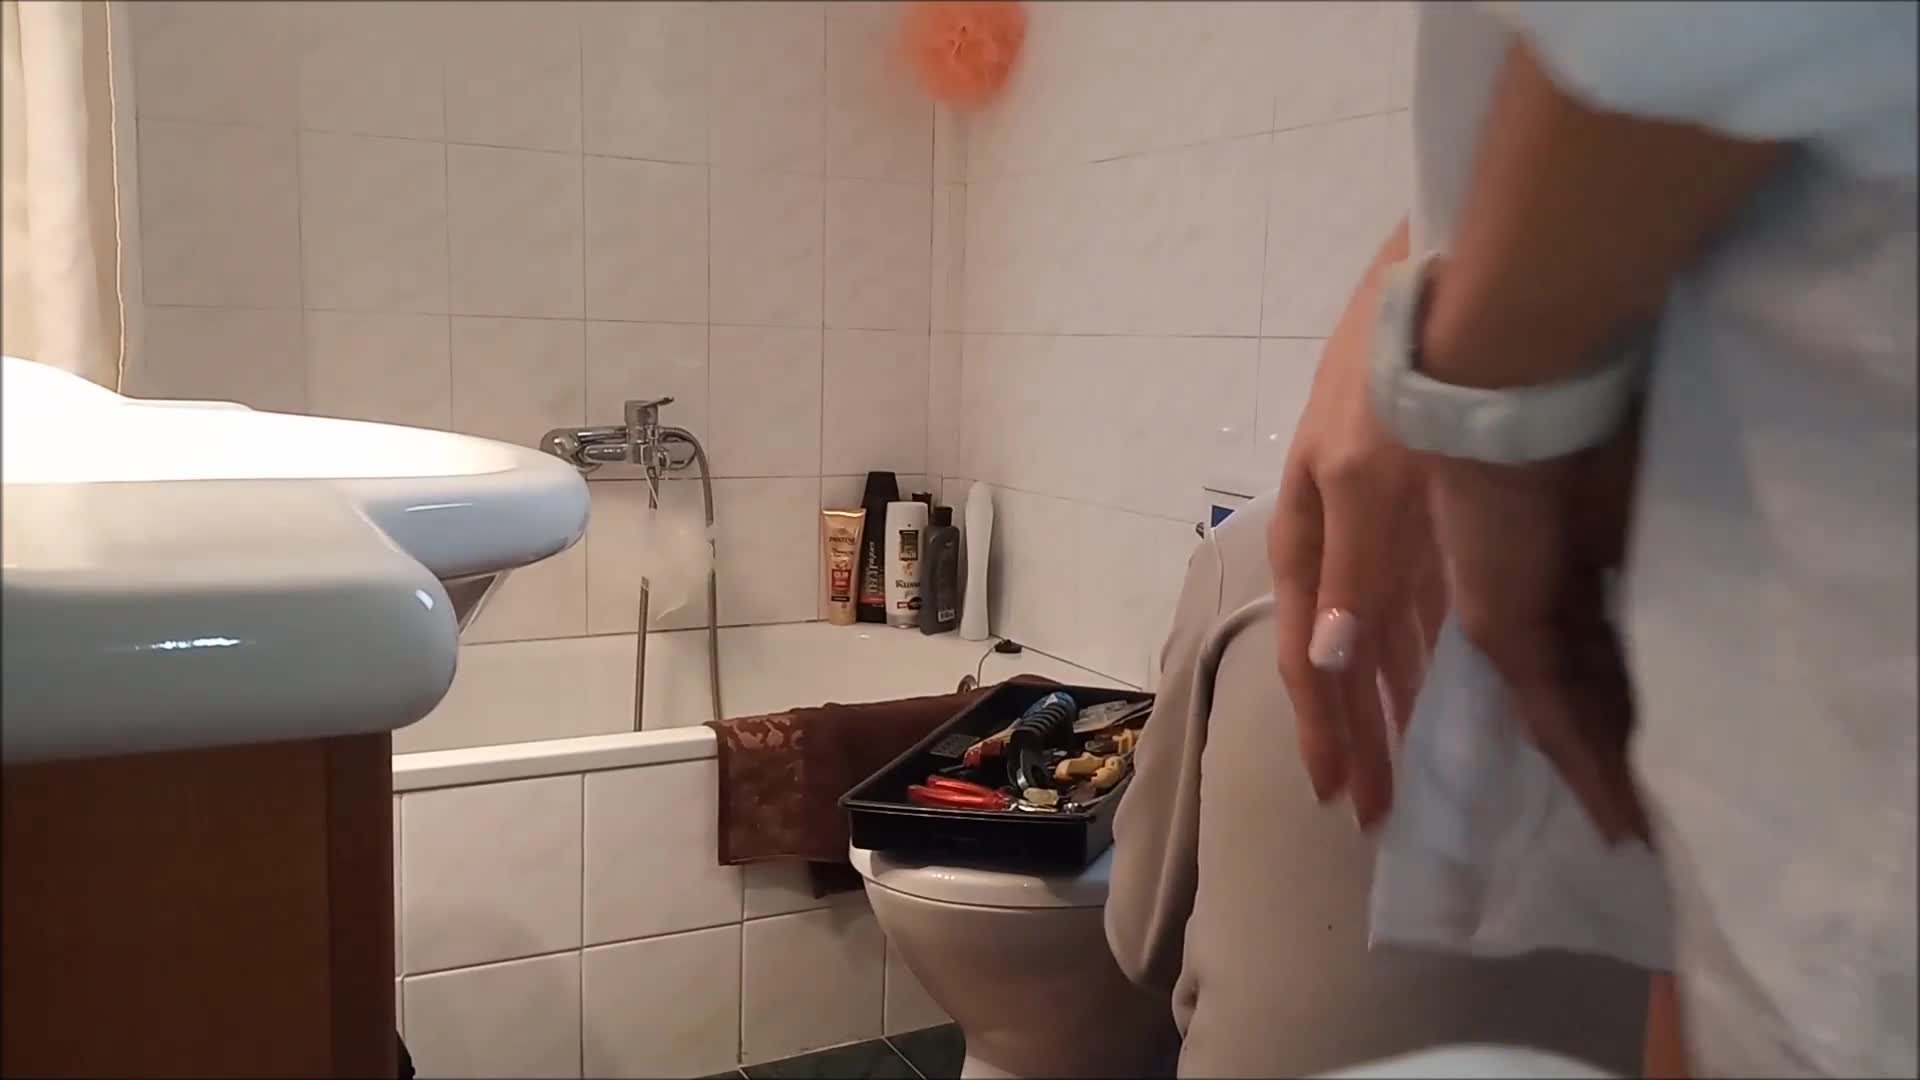 Amateur moeder op toilet